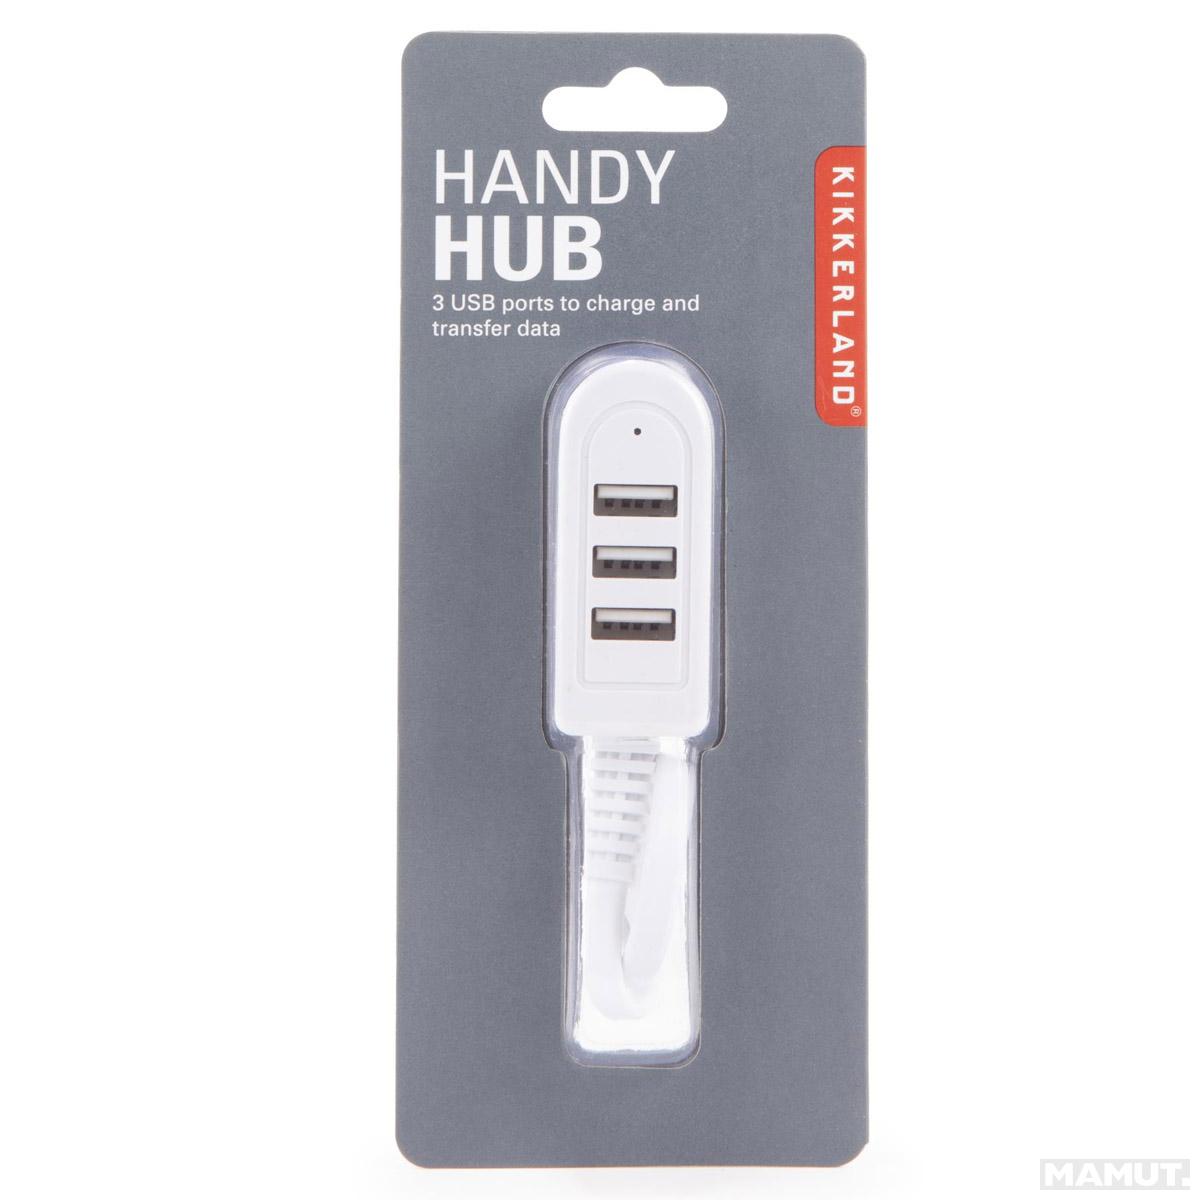 USB Handy HUB 